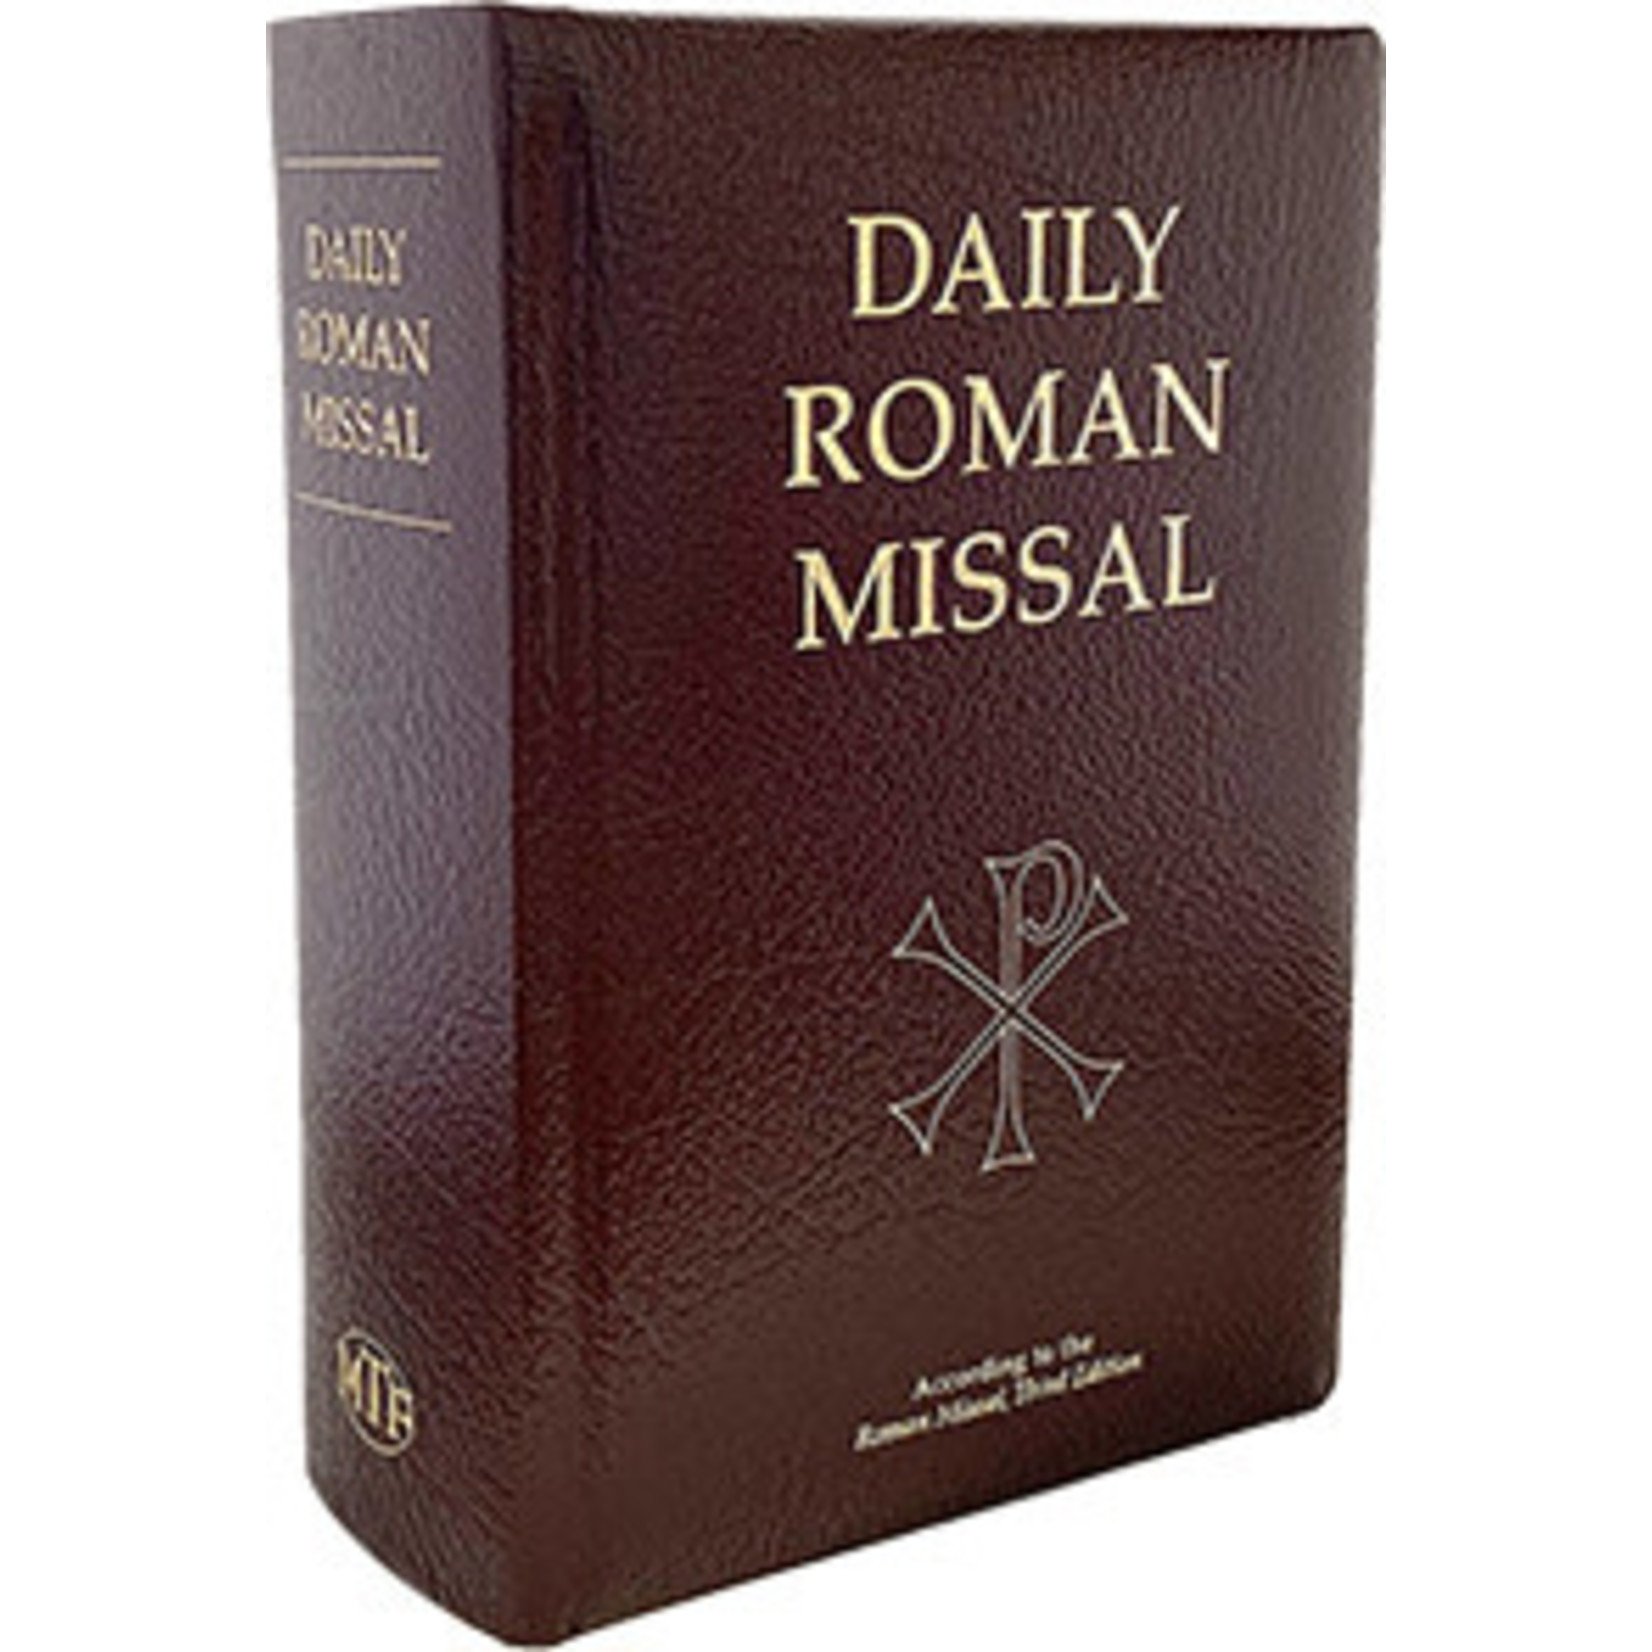 Daily Roman Missal English